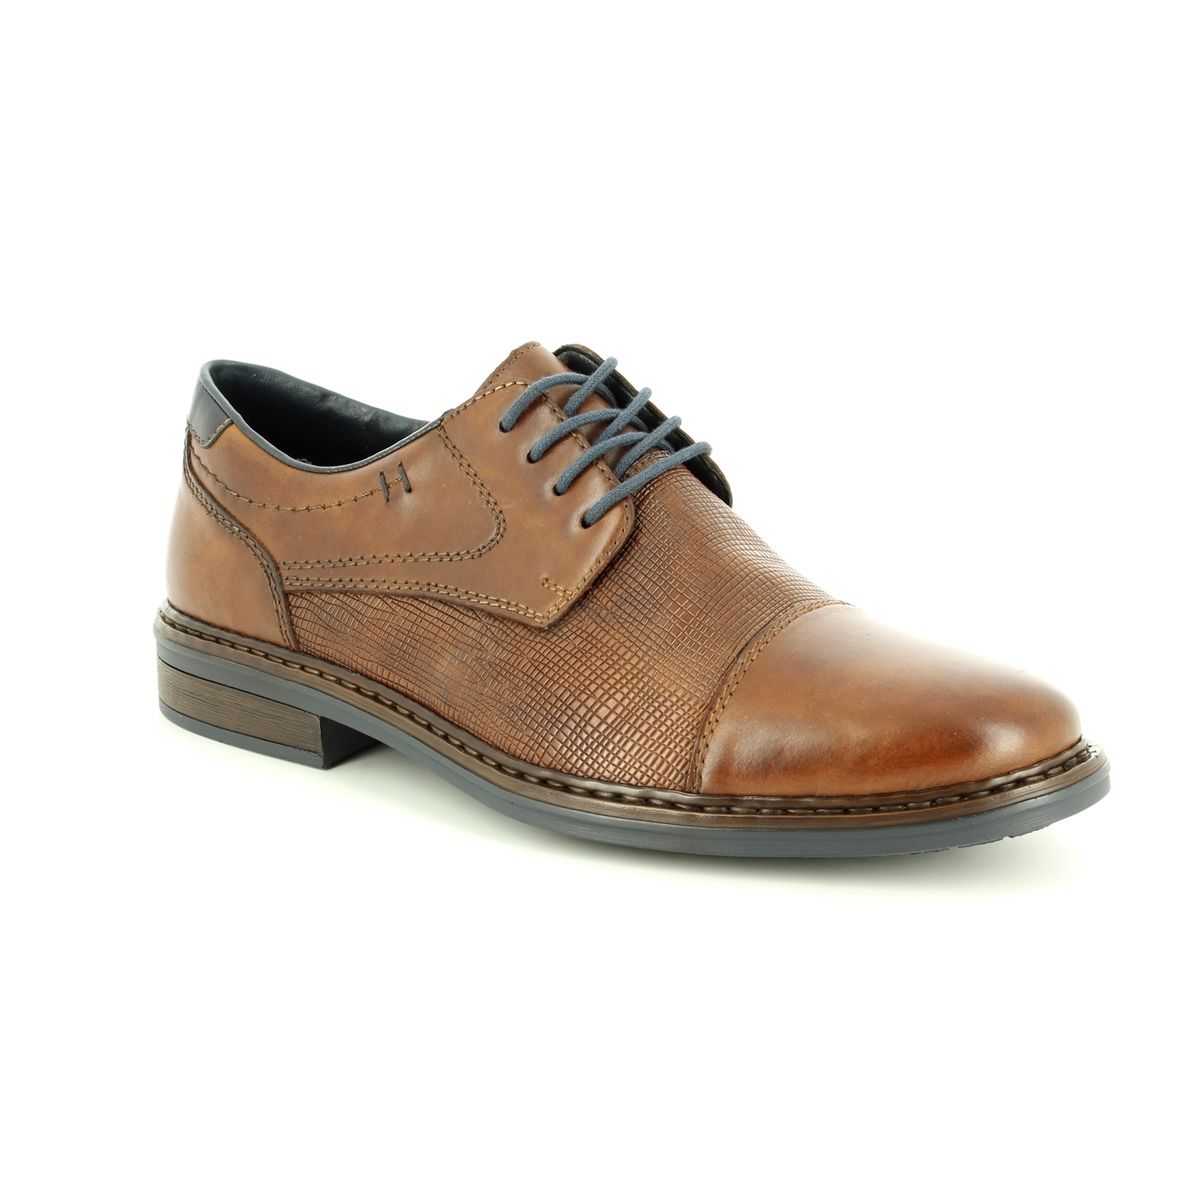 Rieker 17618-25 formal shoes